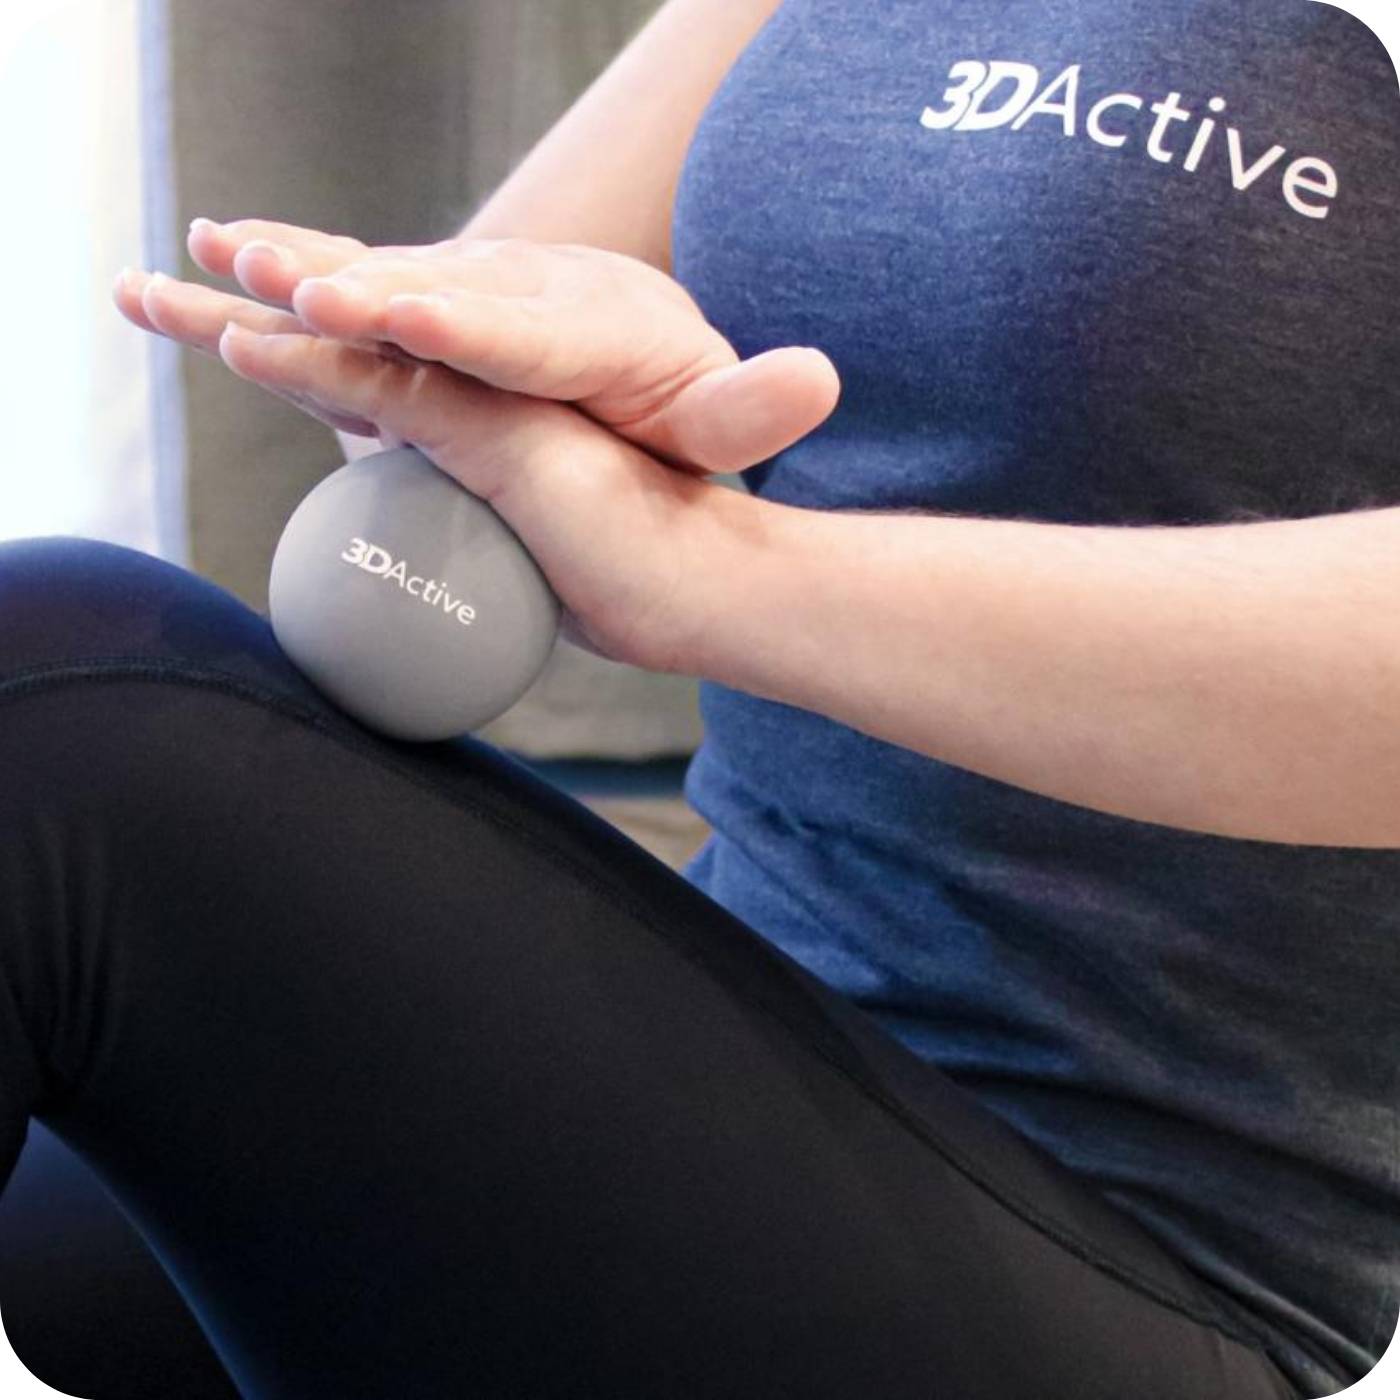 woman using her 3dactive massage ball to massage her leg